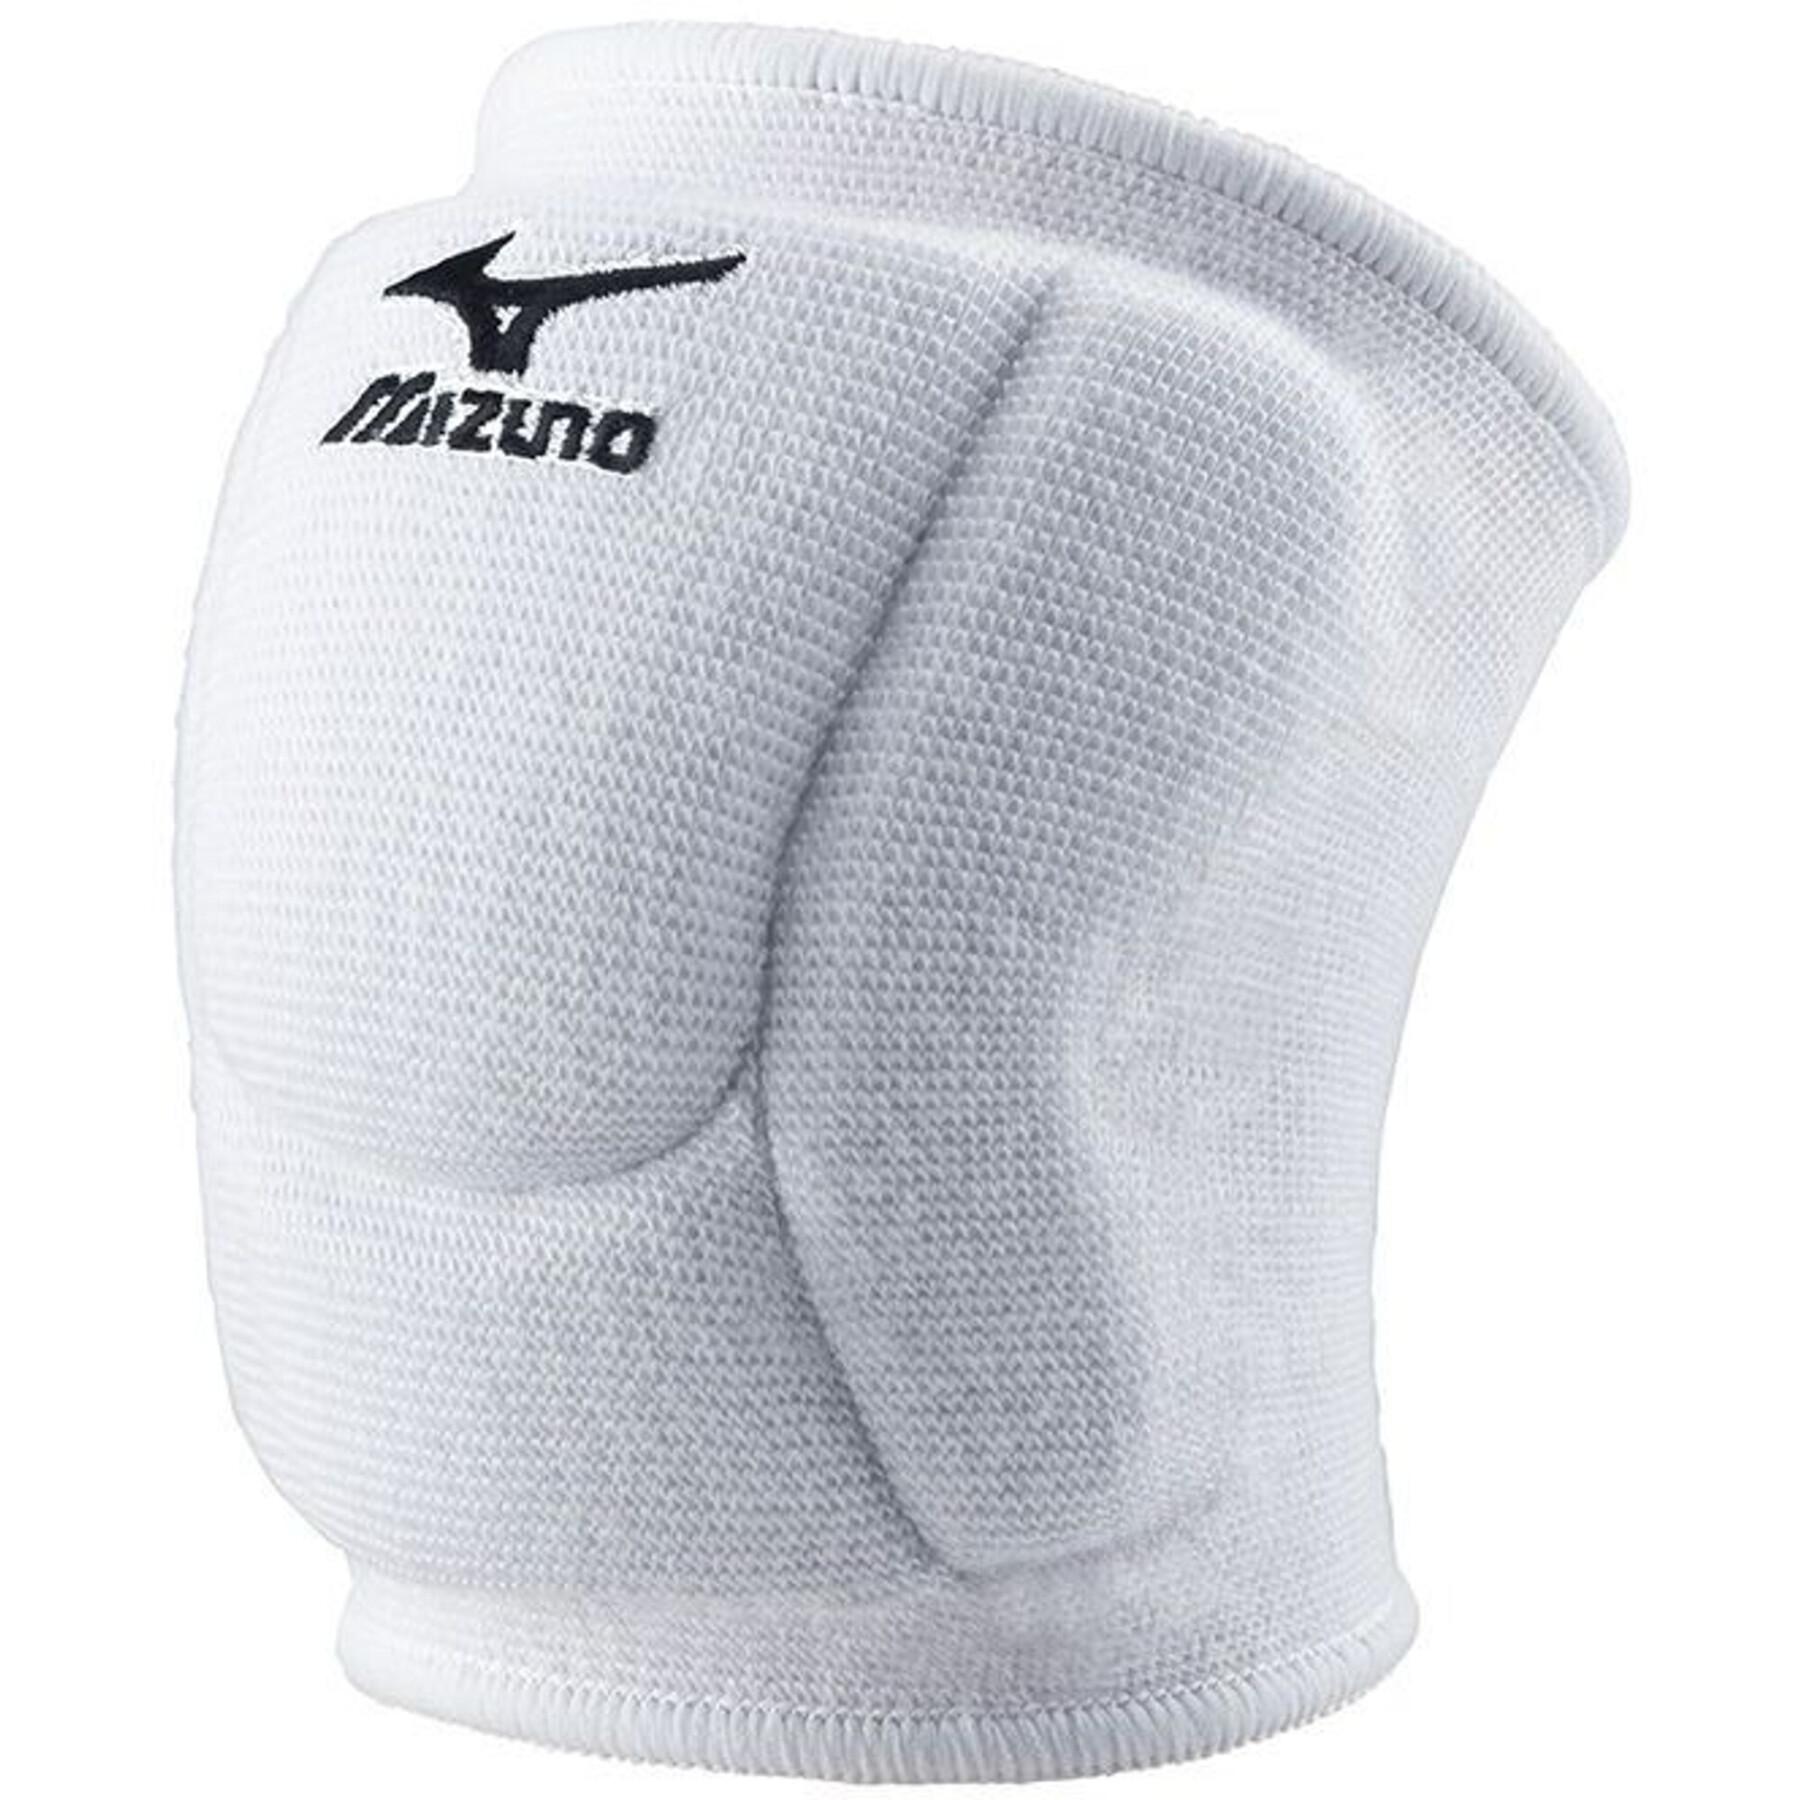 Knee pads Mizuno compact VS1 (x2)